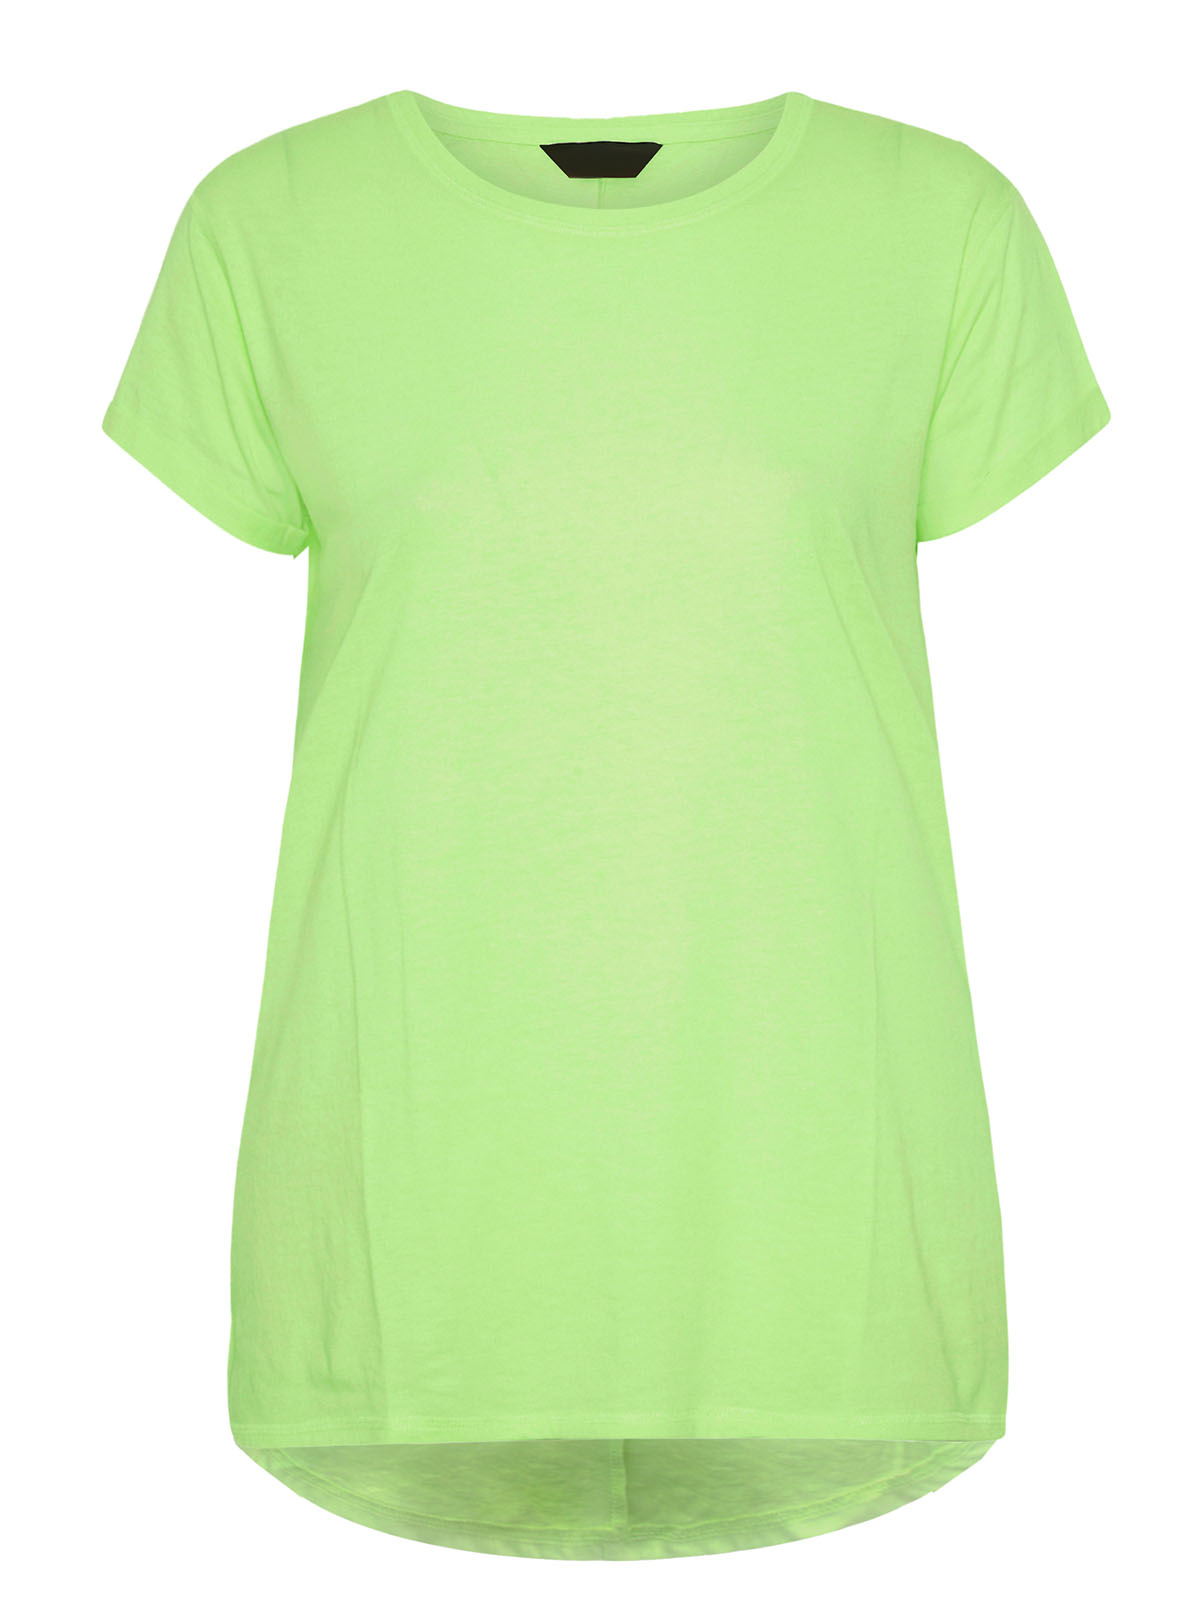 CURVE - - Curve NEON-GREEN Topstitch Short Sleeve Dipped Hem T-Shirt ...